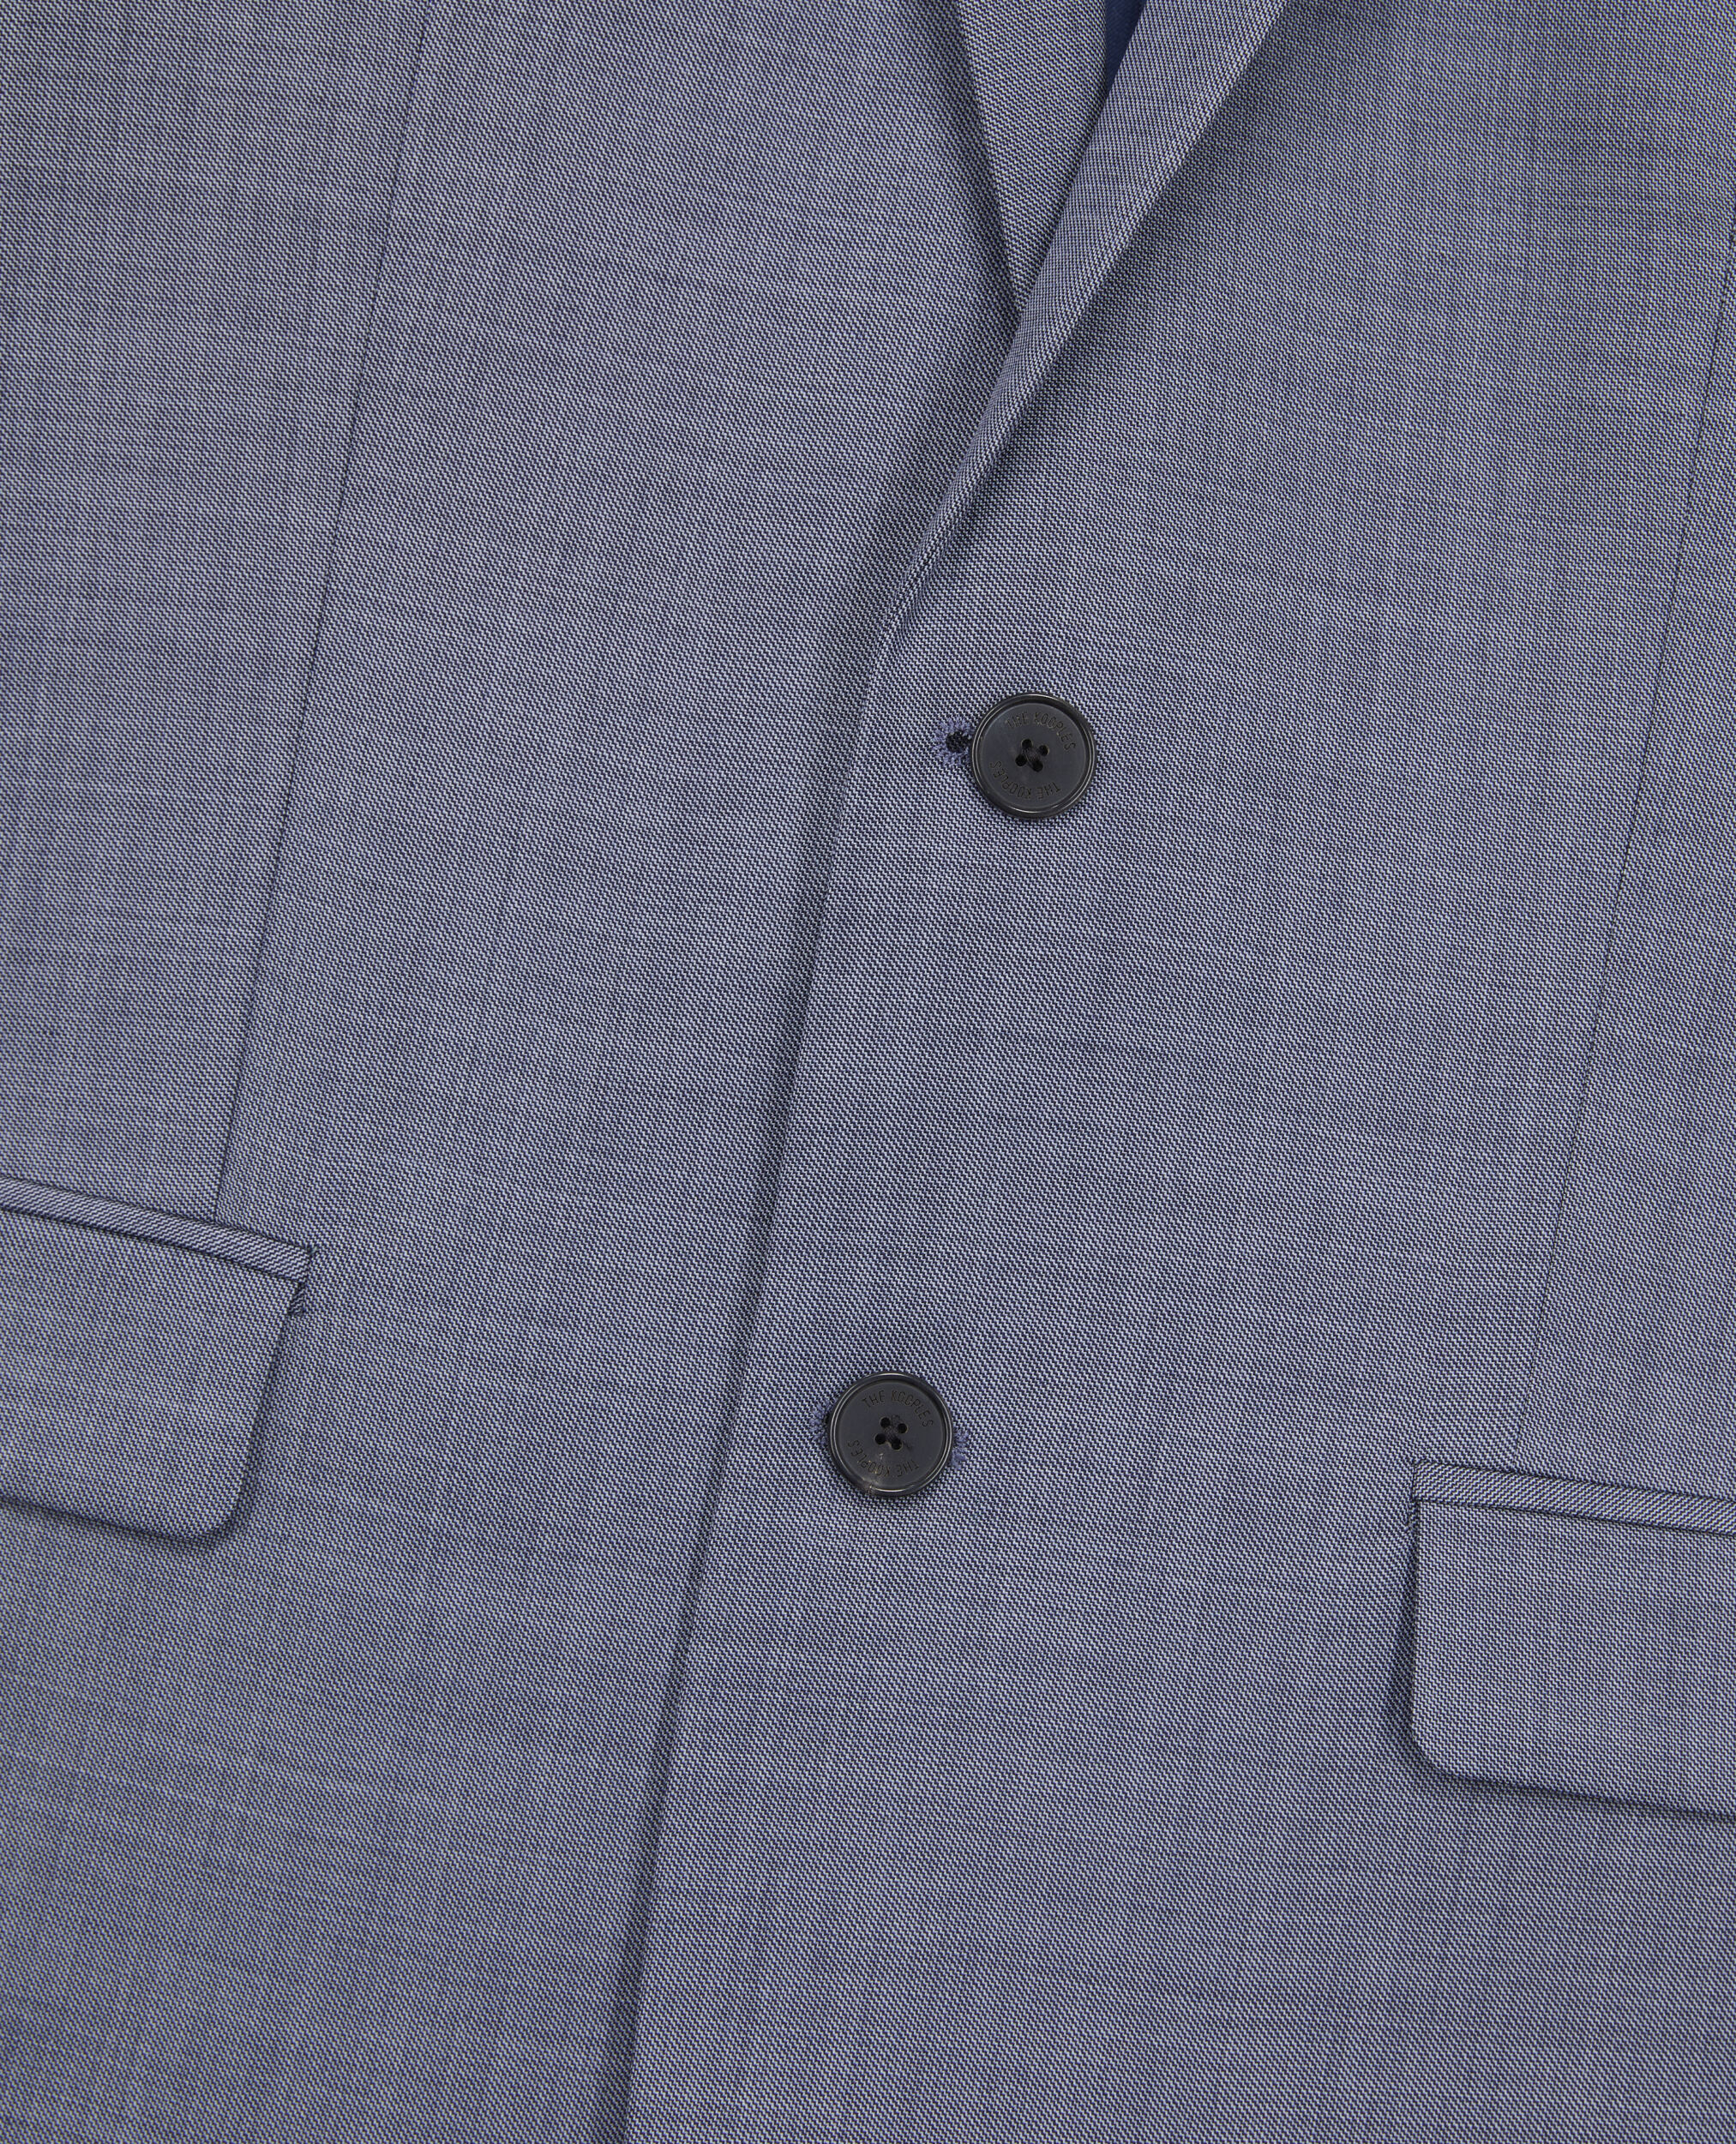 Chaqueta traje lana cuadros grises azules, LIGHT BLUE, hi-res image number null